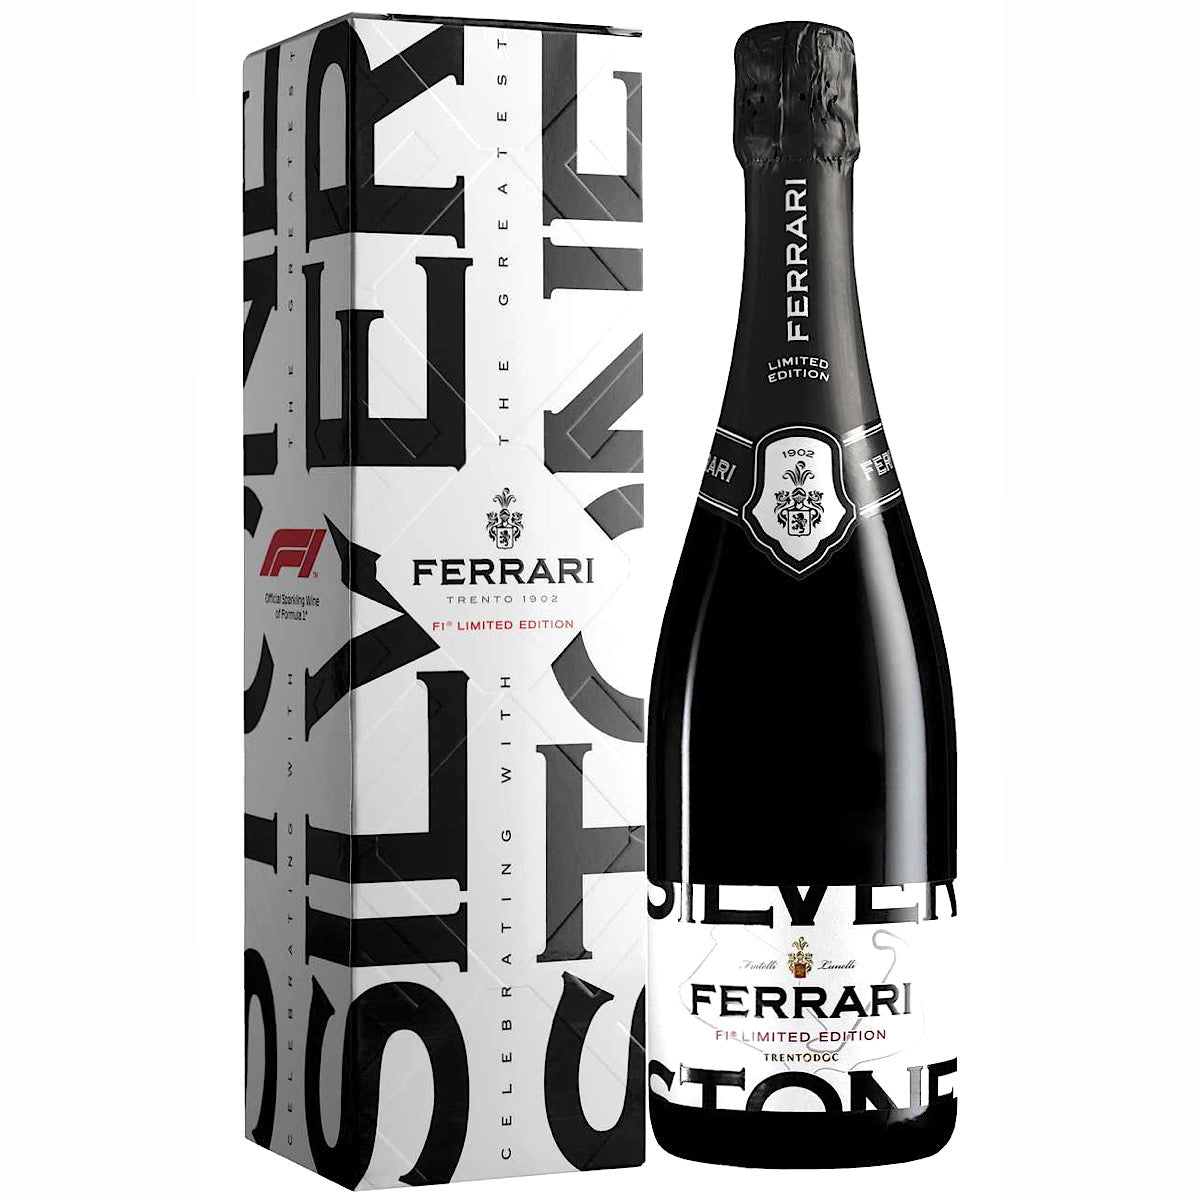 Ferrari Brut F1 Limited Edition Silverstone Gift Box 6 Bottle Case75cl